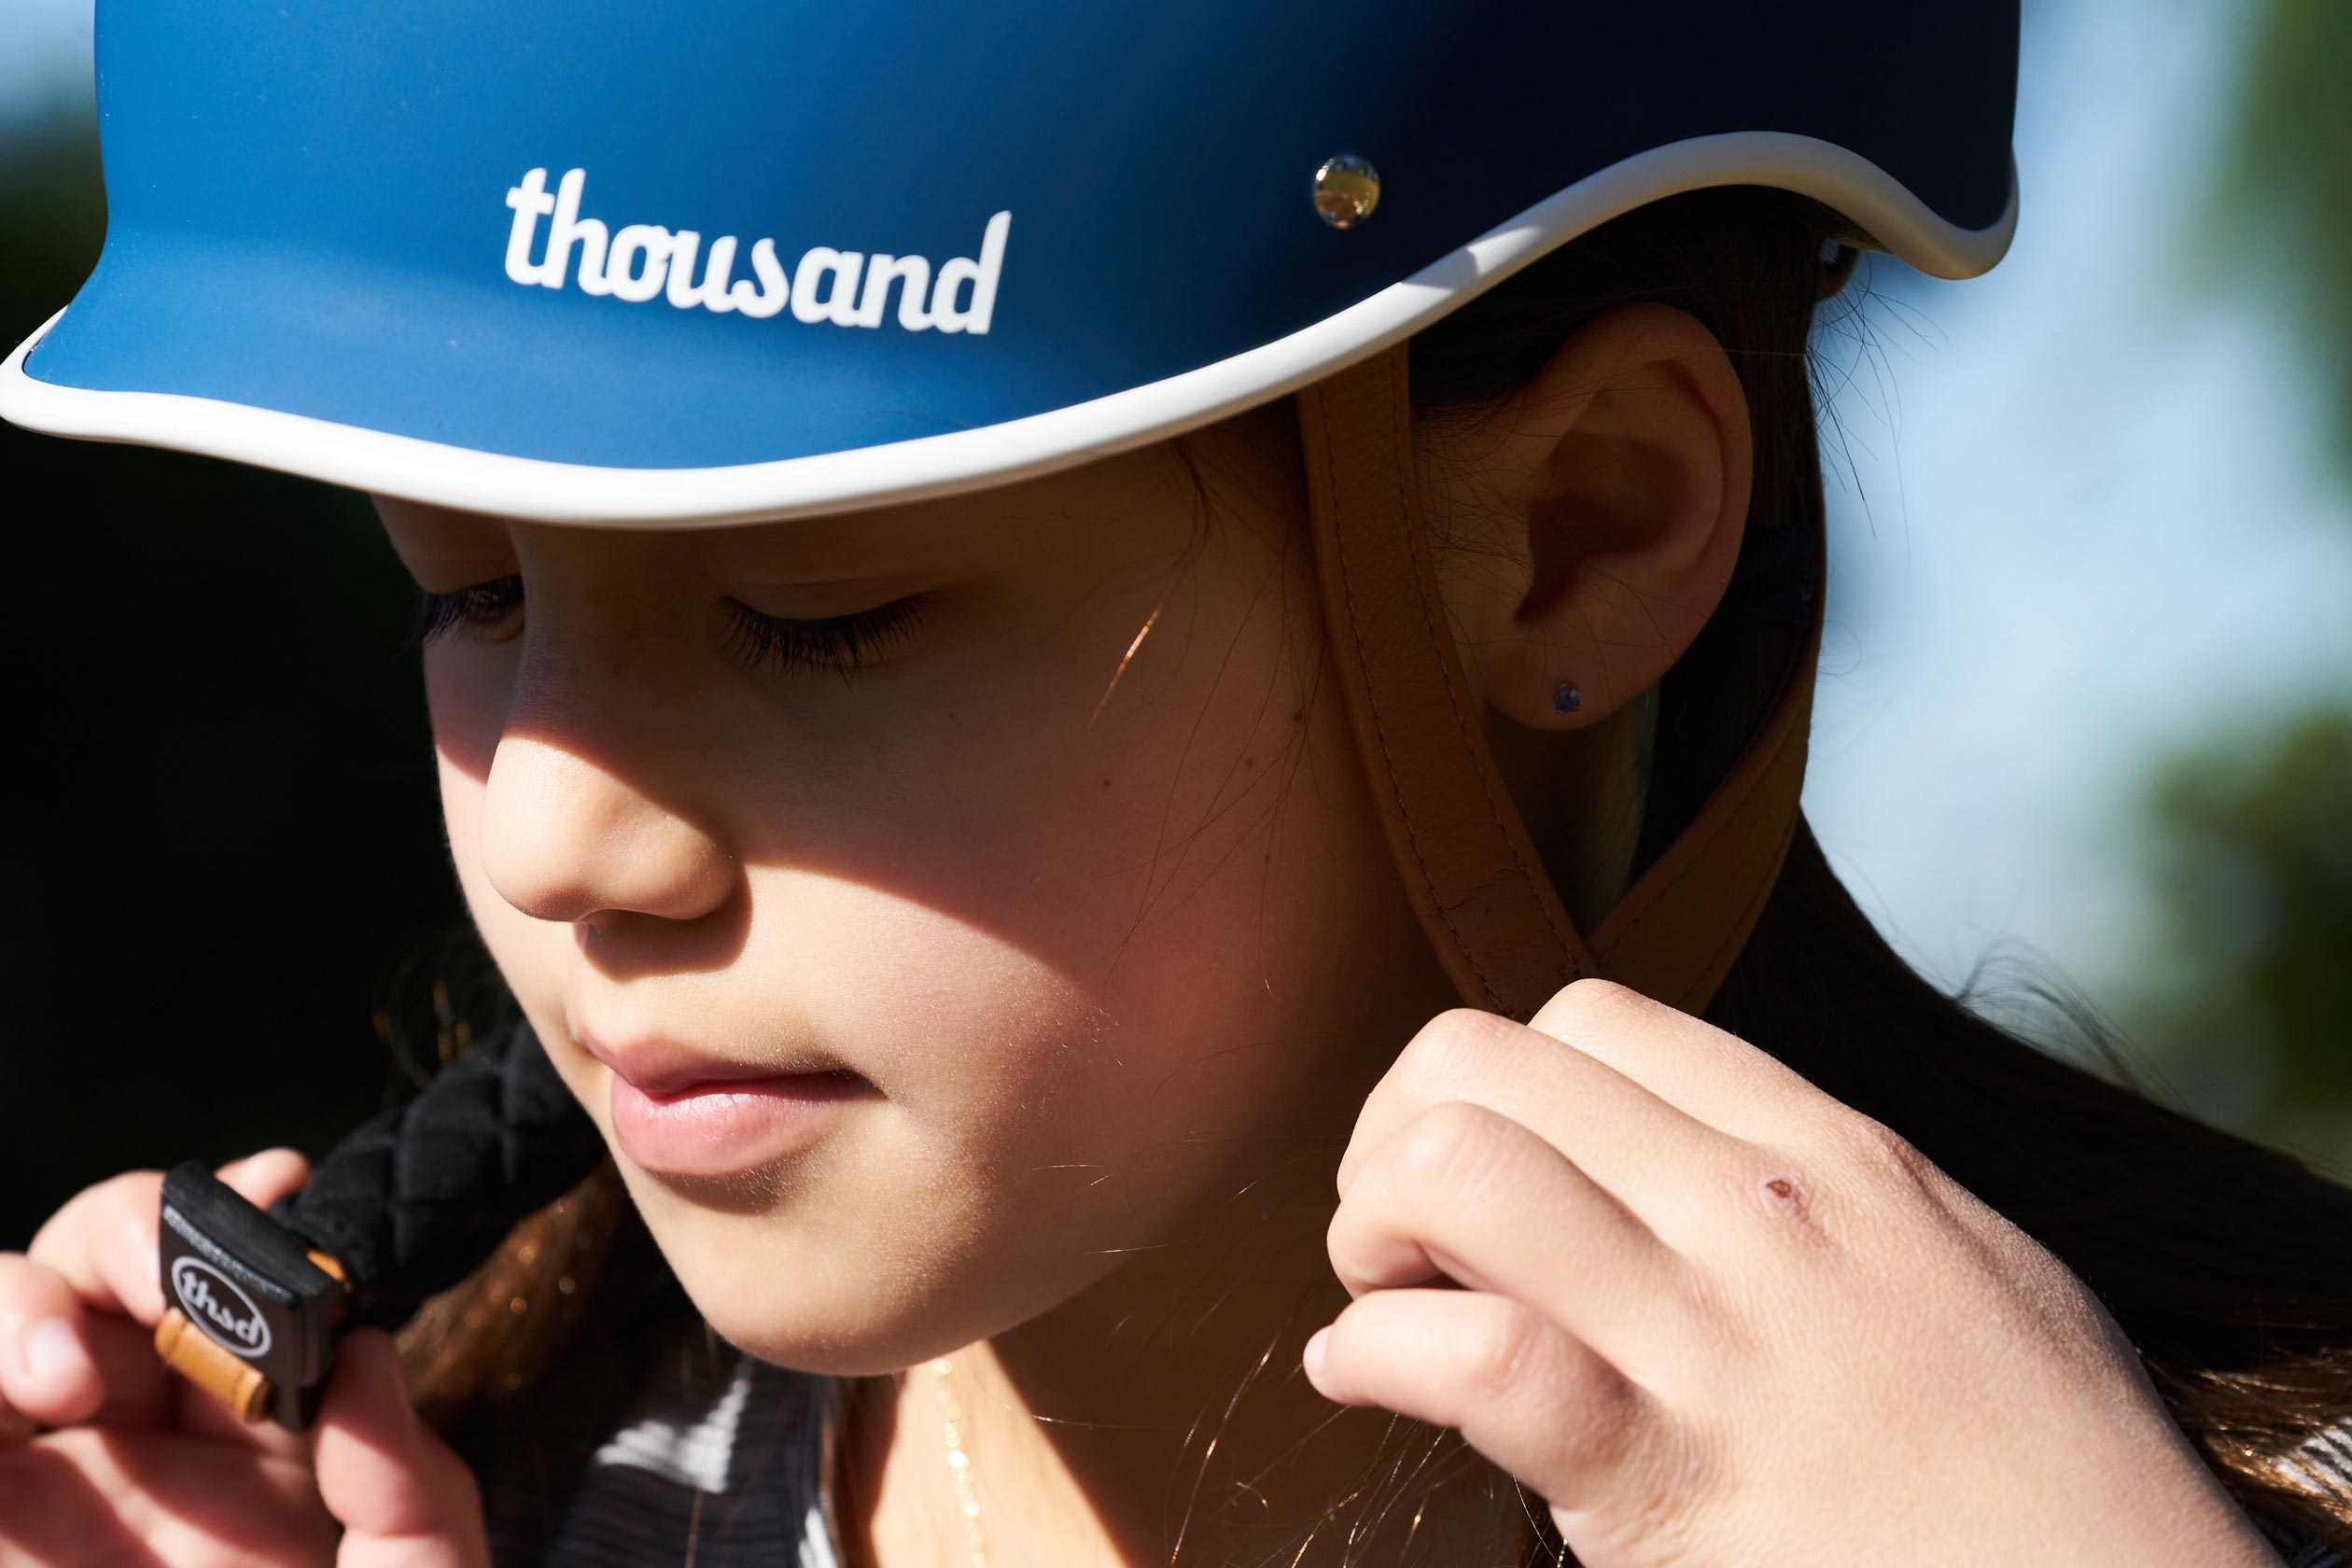 Thousand Jr Kids Helmet, Blazing Blue